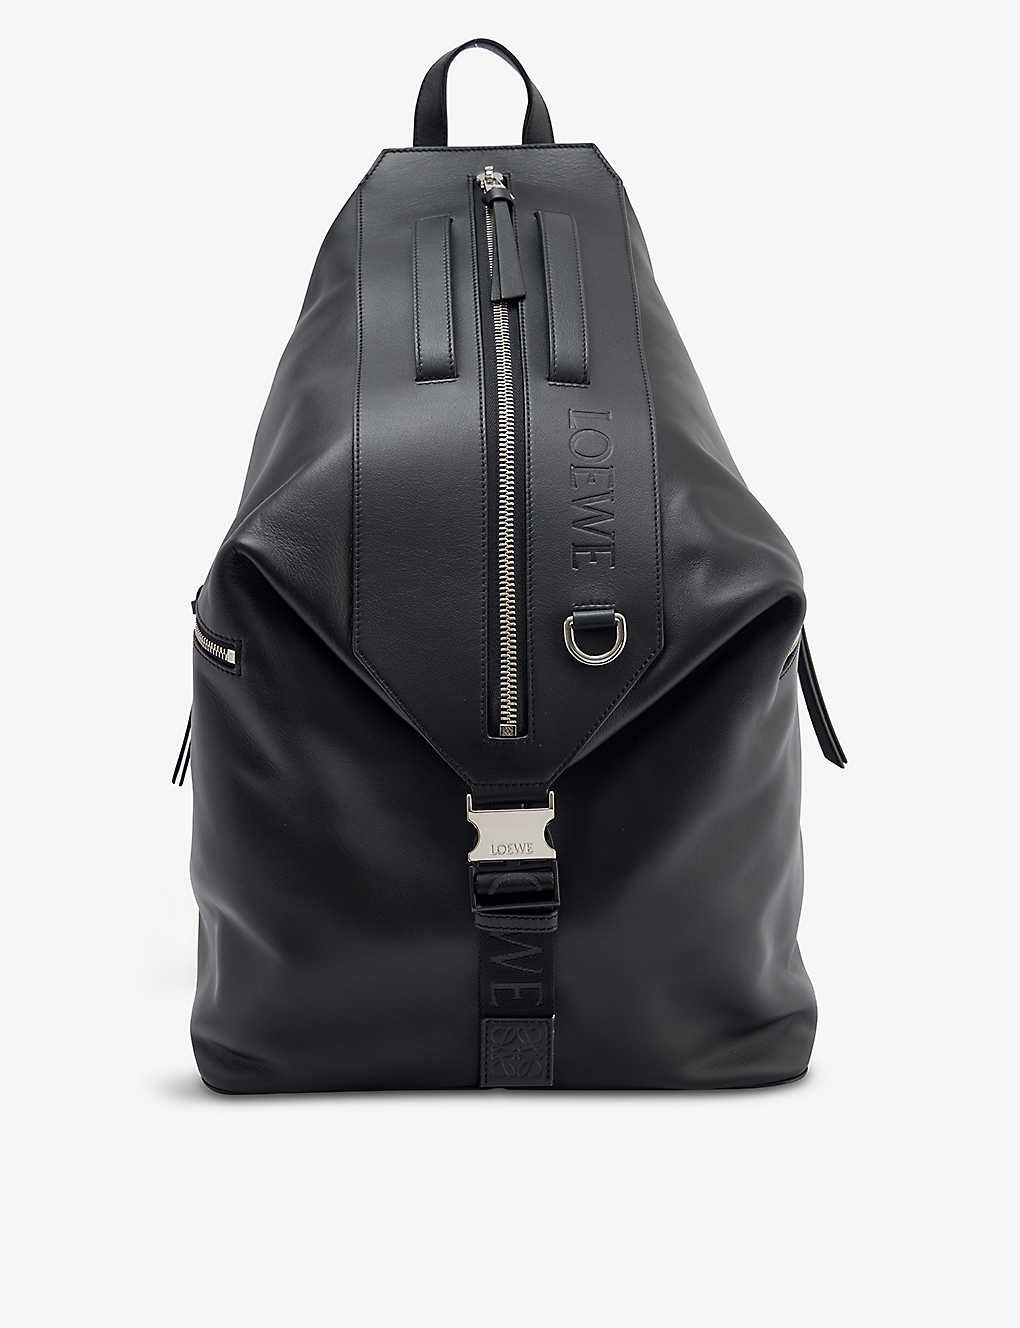 LOEWE Convertible leather backpack | Selfridges